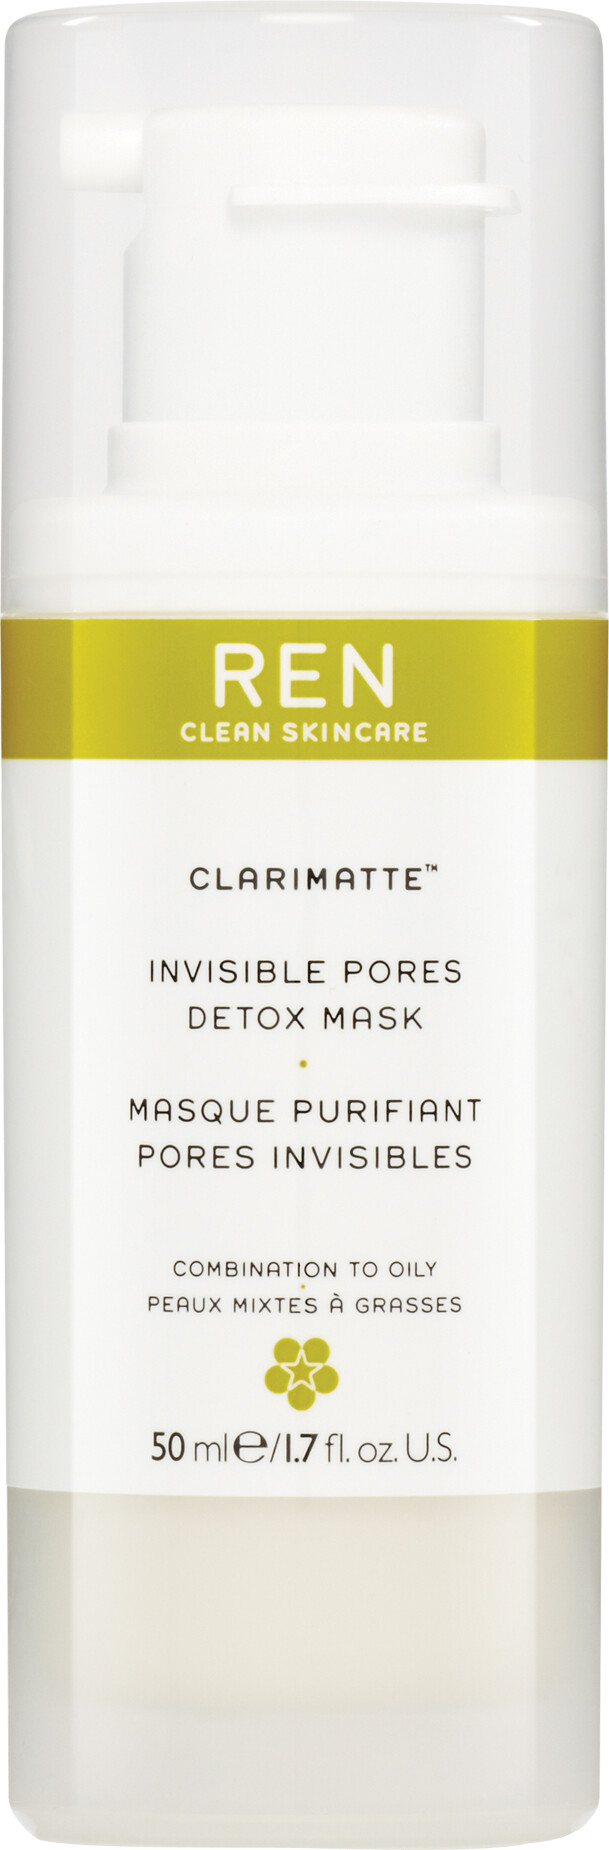 REN Clarimatte Invisible Pores Detox Mask 50ml